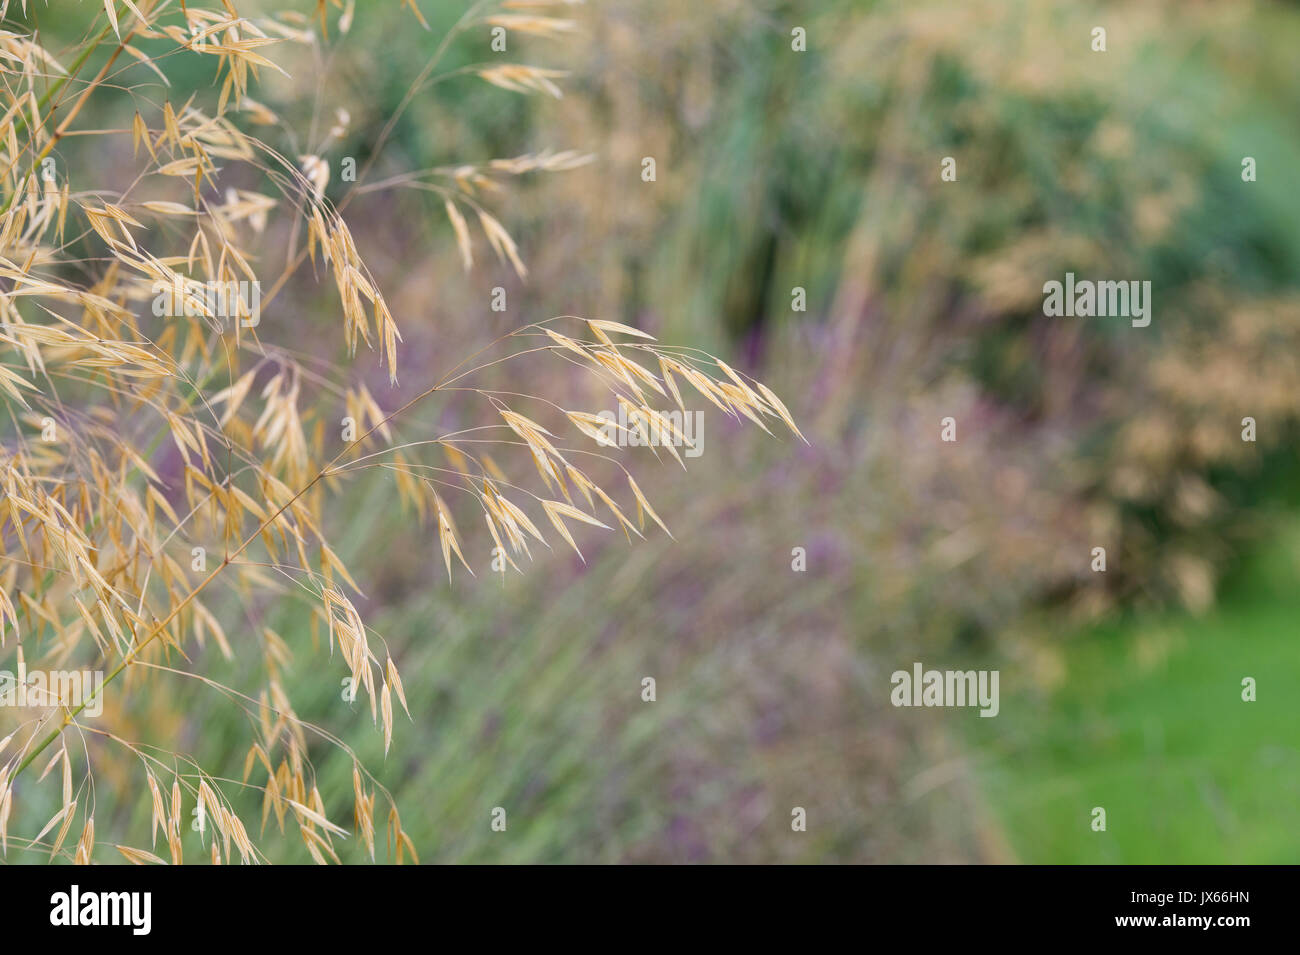 Stipa gigantea 'Gold Fontaene' . Golden oats. Giant feather grass in July UK Stock Photo